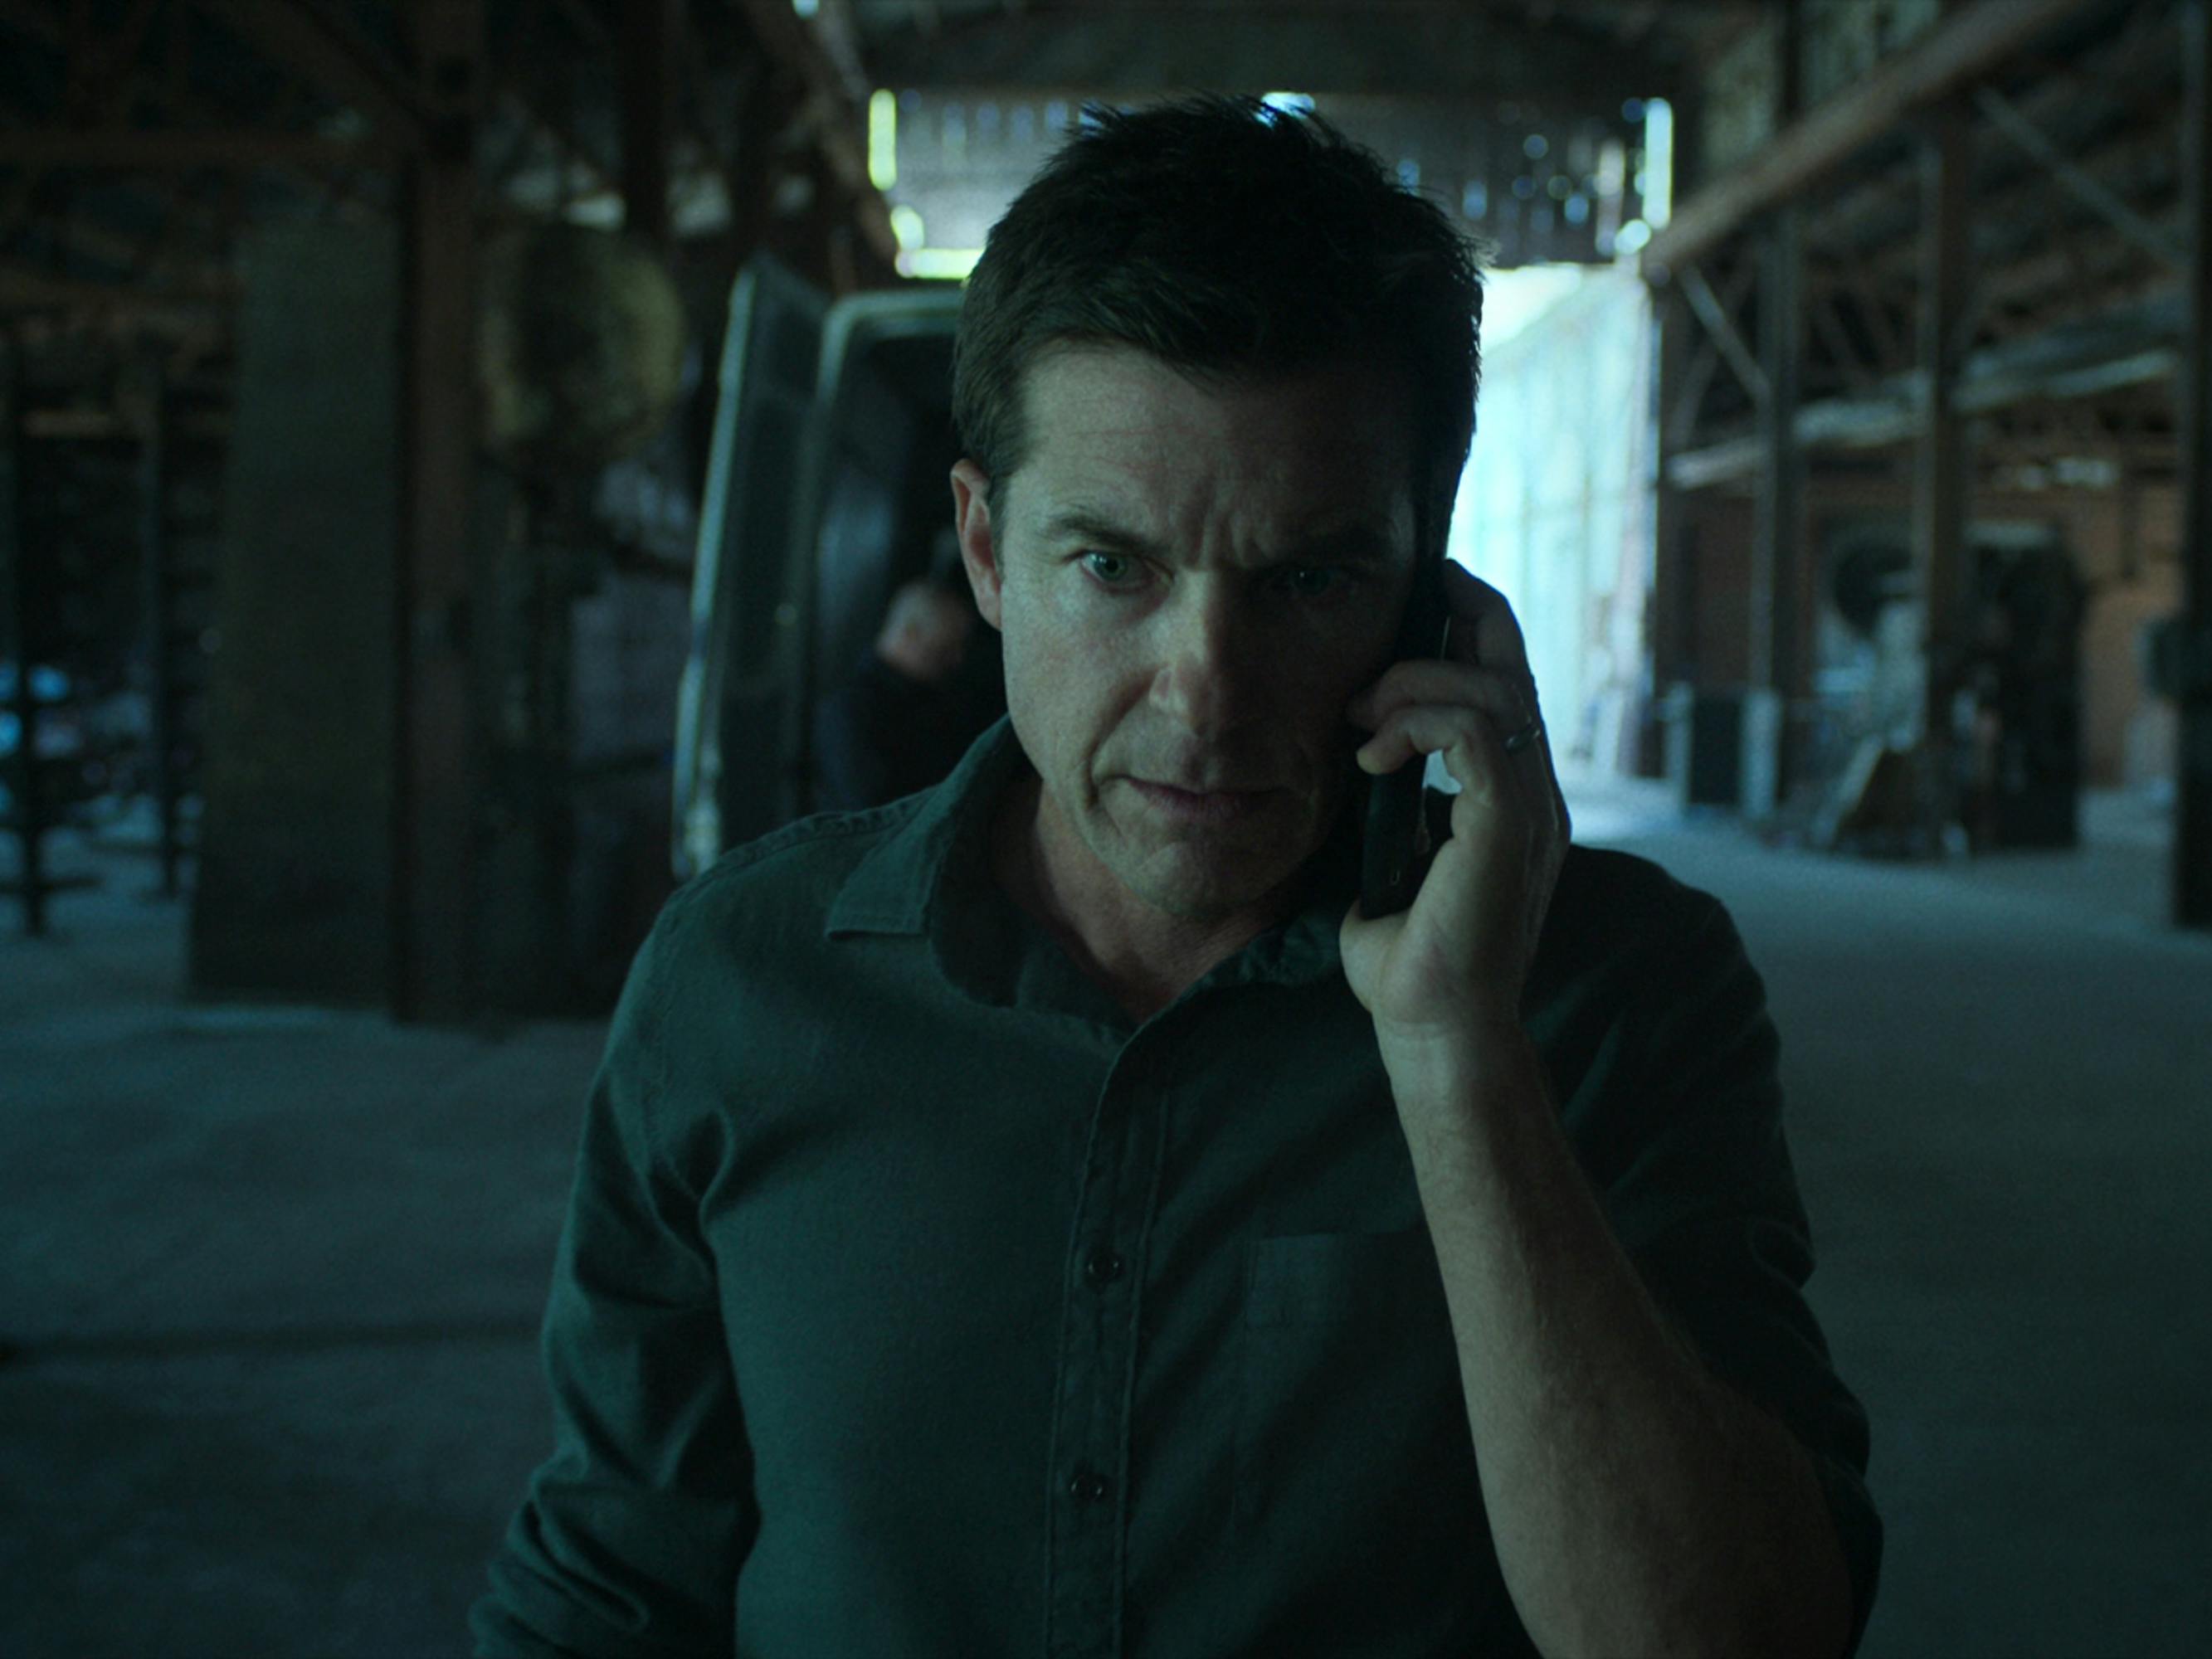 Jason Bateman talks on the phone with an urgent expression.